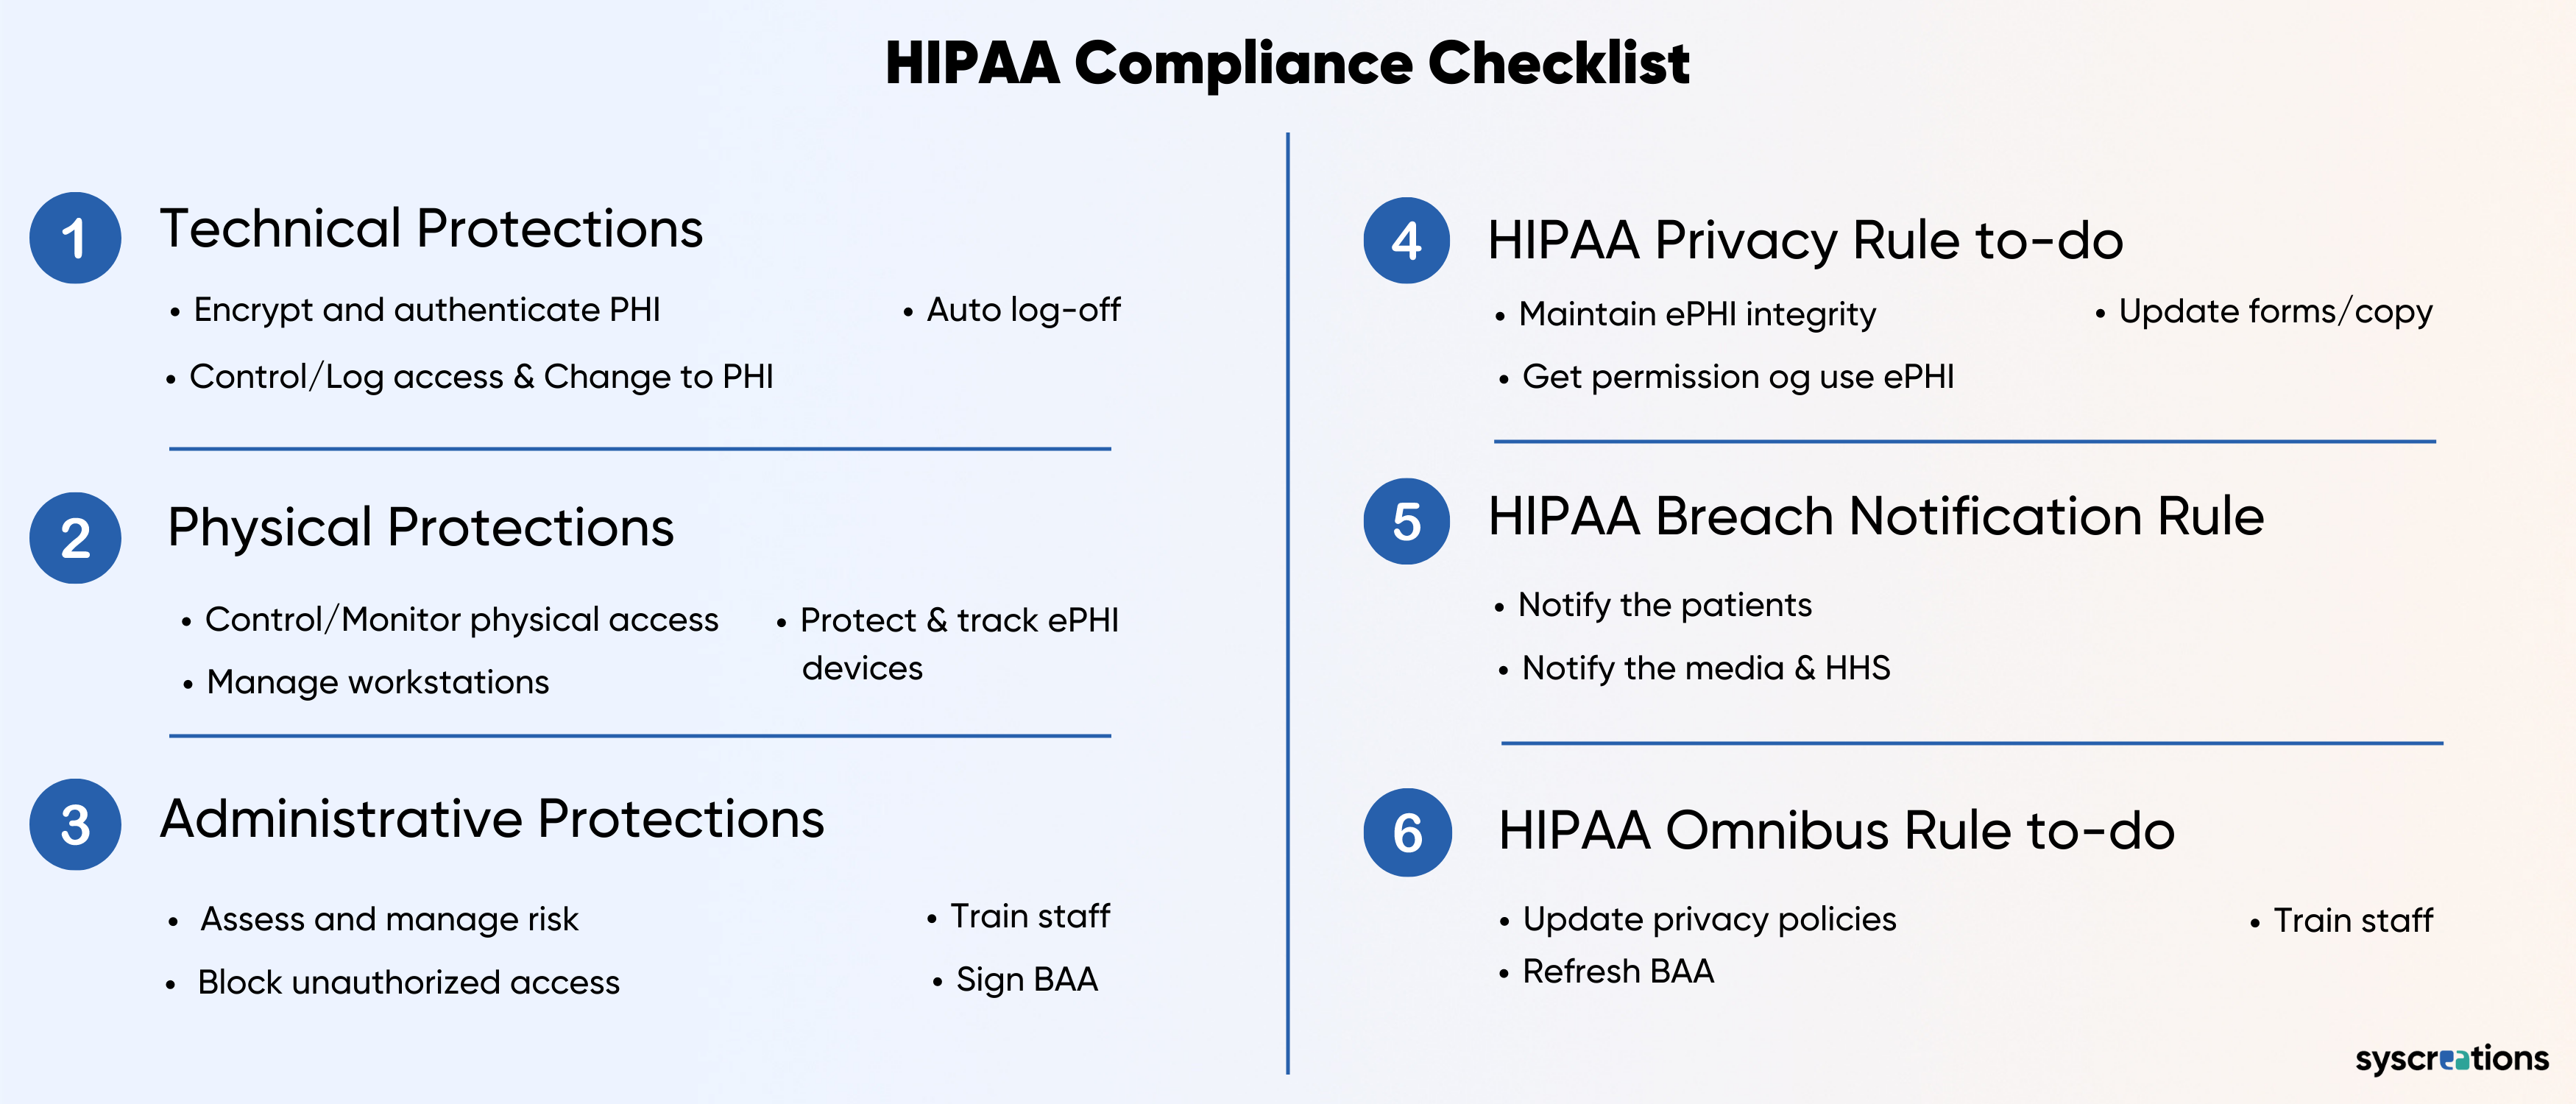 HIPAA Compliance Checklist (1)